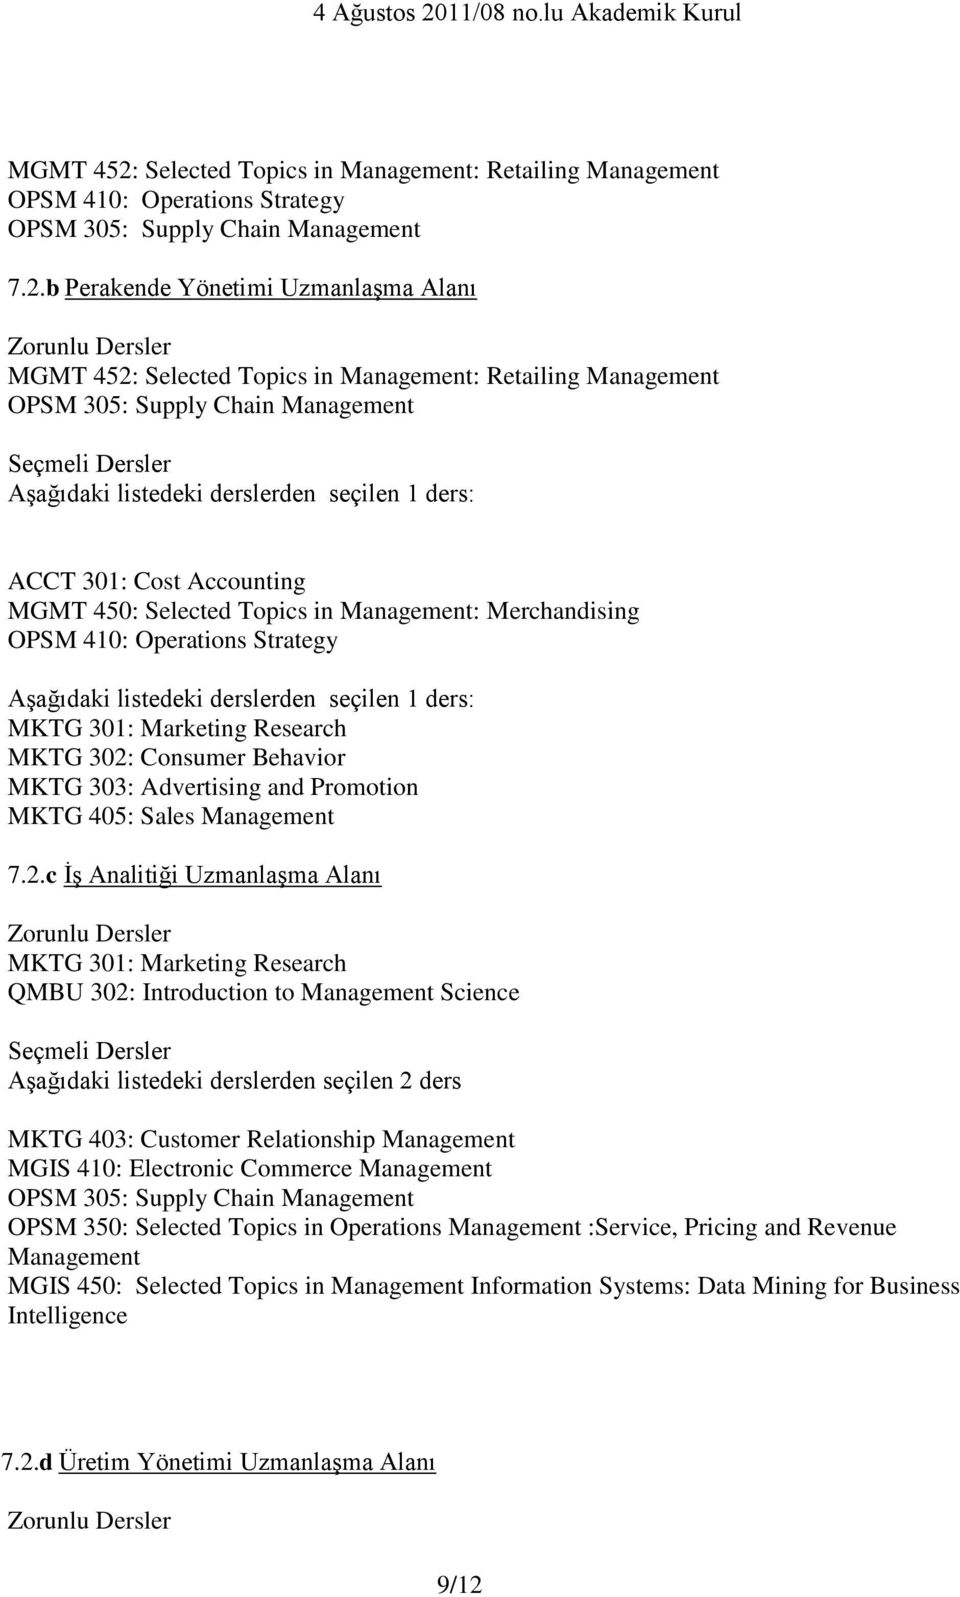 b Perakende Yönetimi Uzmanlaşma Alanı  Selected Topics in Management: Retailing Management OPSM 305: Supply Chain Management ACCT 301: Cost Accounting MGMT 450: Selected Topics in Management: